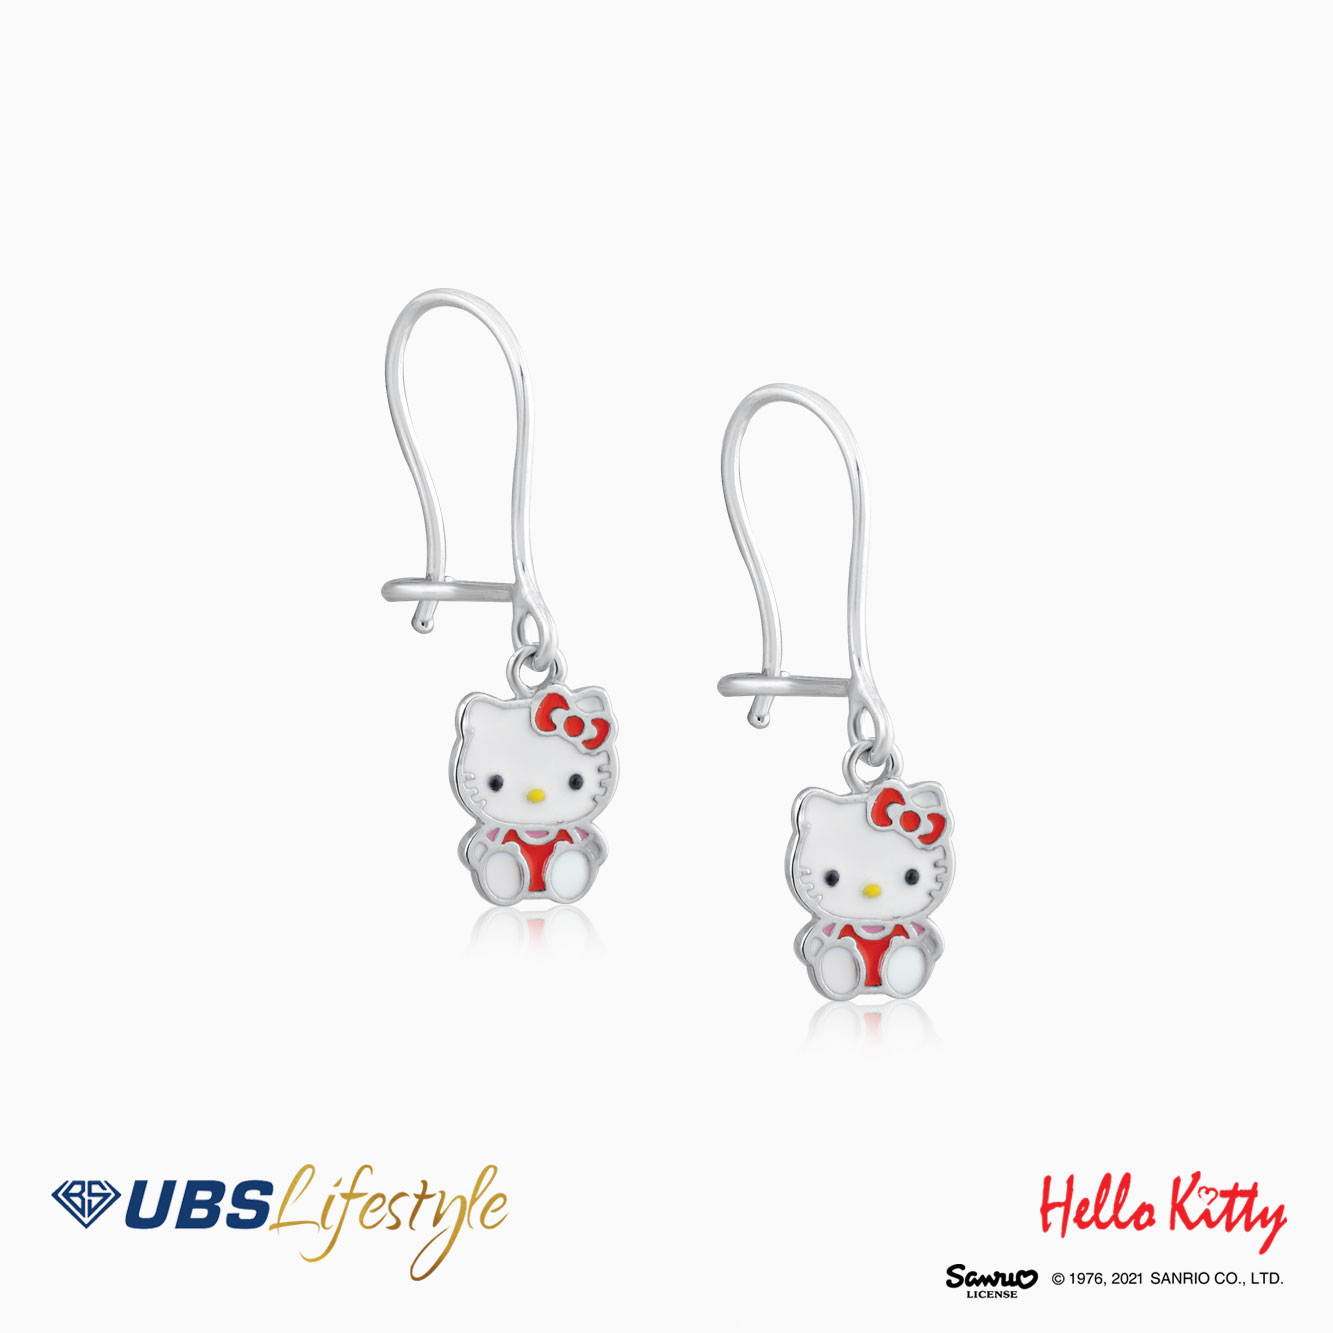 UBS Gold Anting Emas Anak Sanrio Hello Kitty - Aaz0022 - 17K